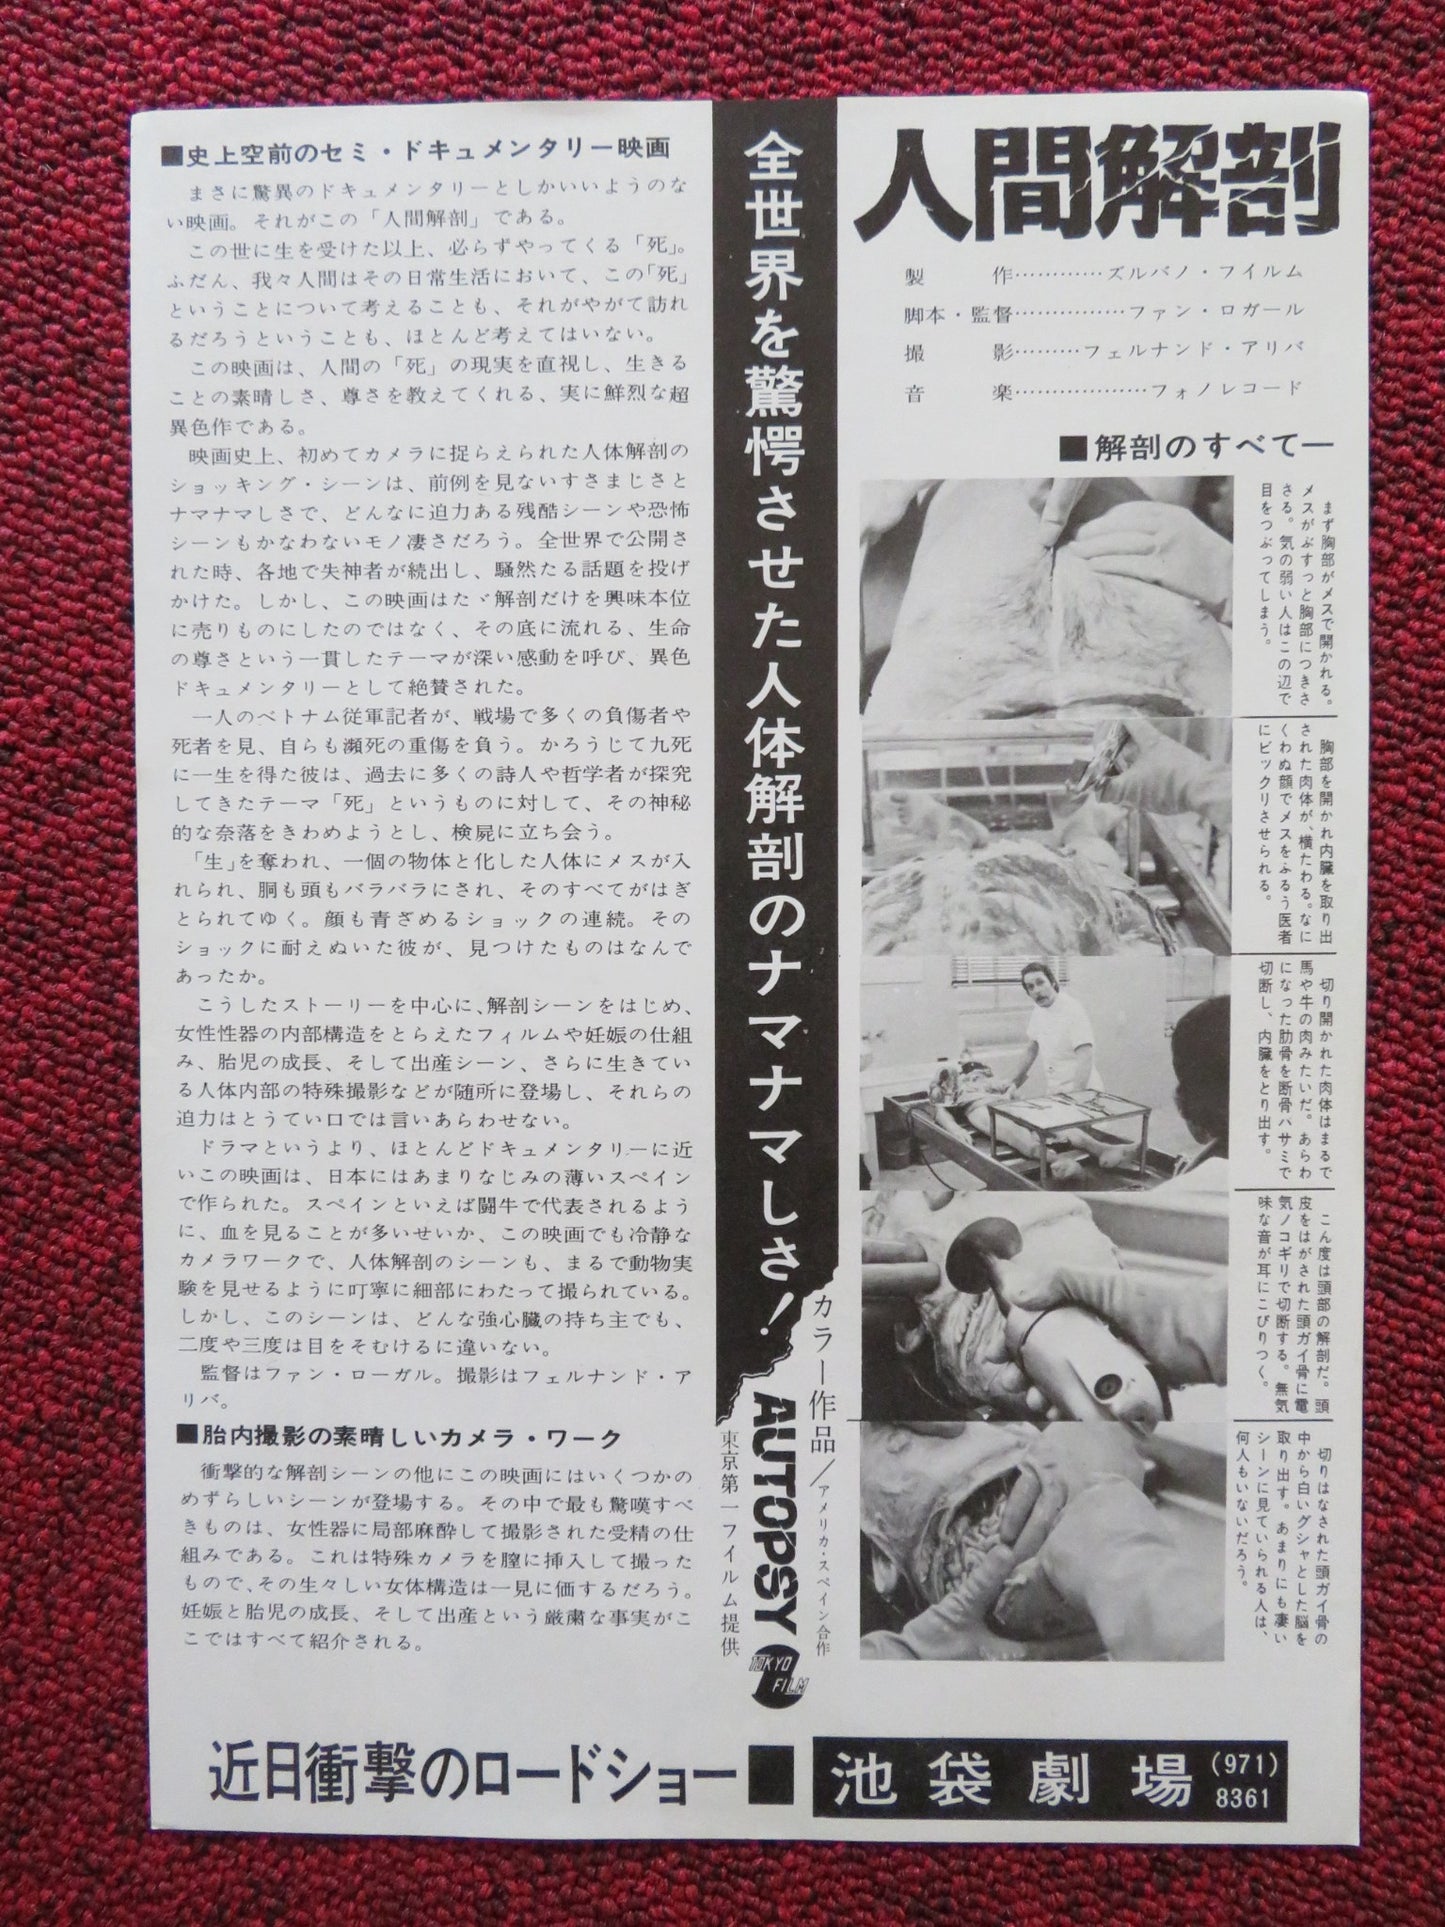 AUTOPSY JAPANESE CHIRASHI (B5) POSTER MIMSY FARMER BARRY PRIMUS 1975